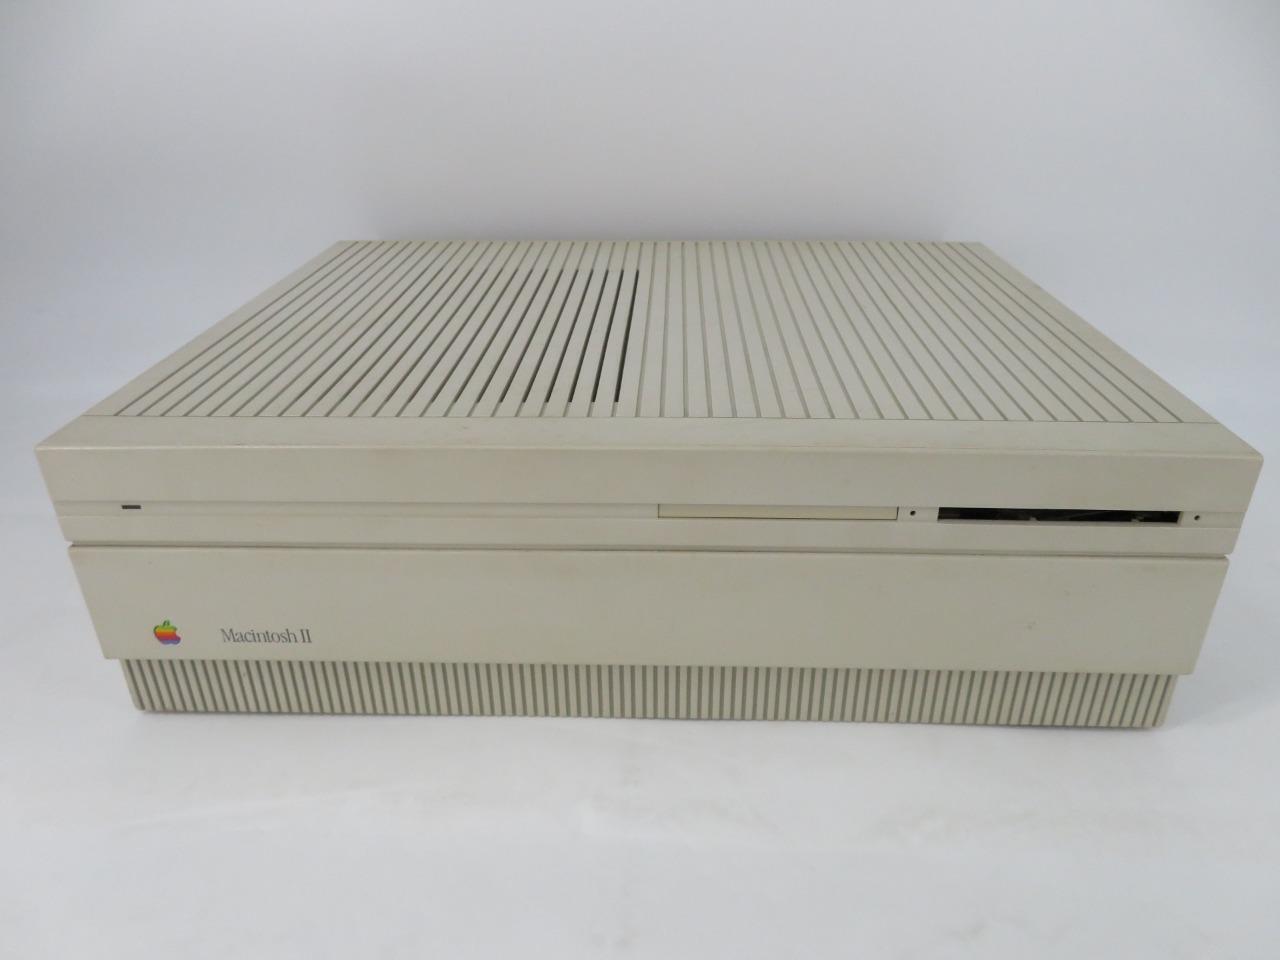 AS IS - Vintage Apple Macintosh II 2 M5000 Computer * * NO POWER * * UNTESTED